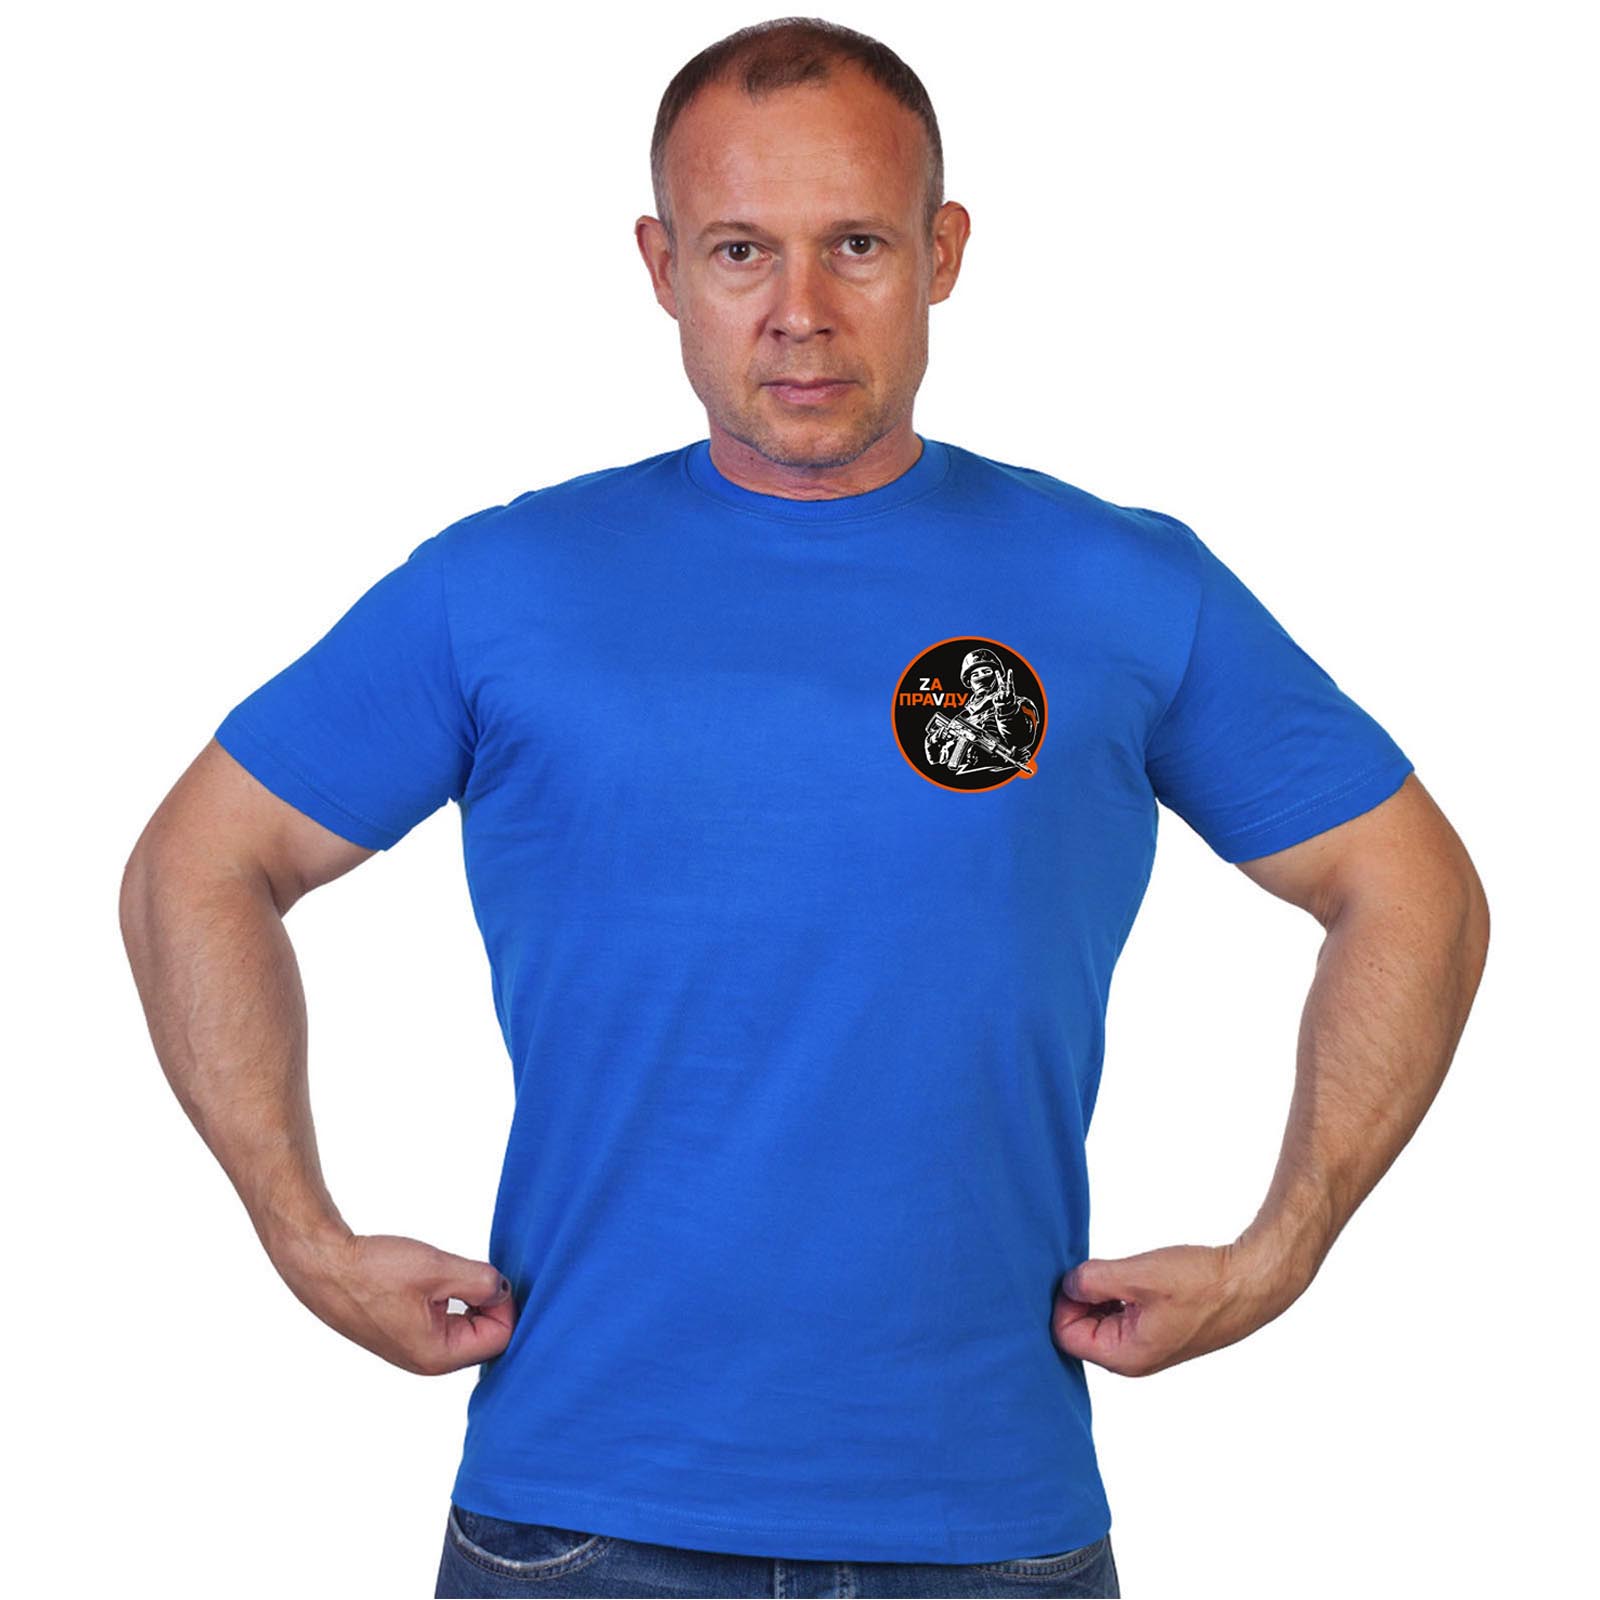 Васильковая футболка с трансфером "Zа праVду"